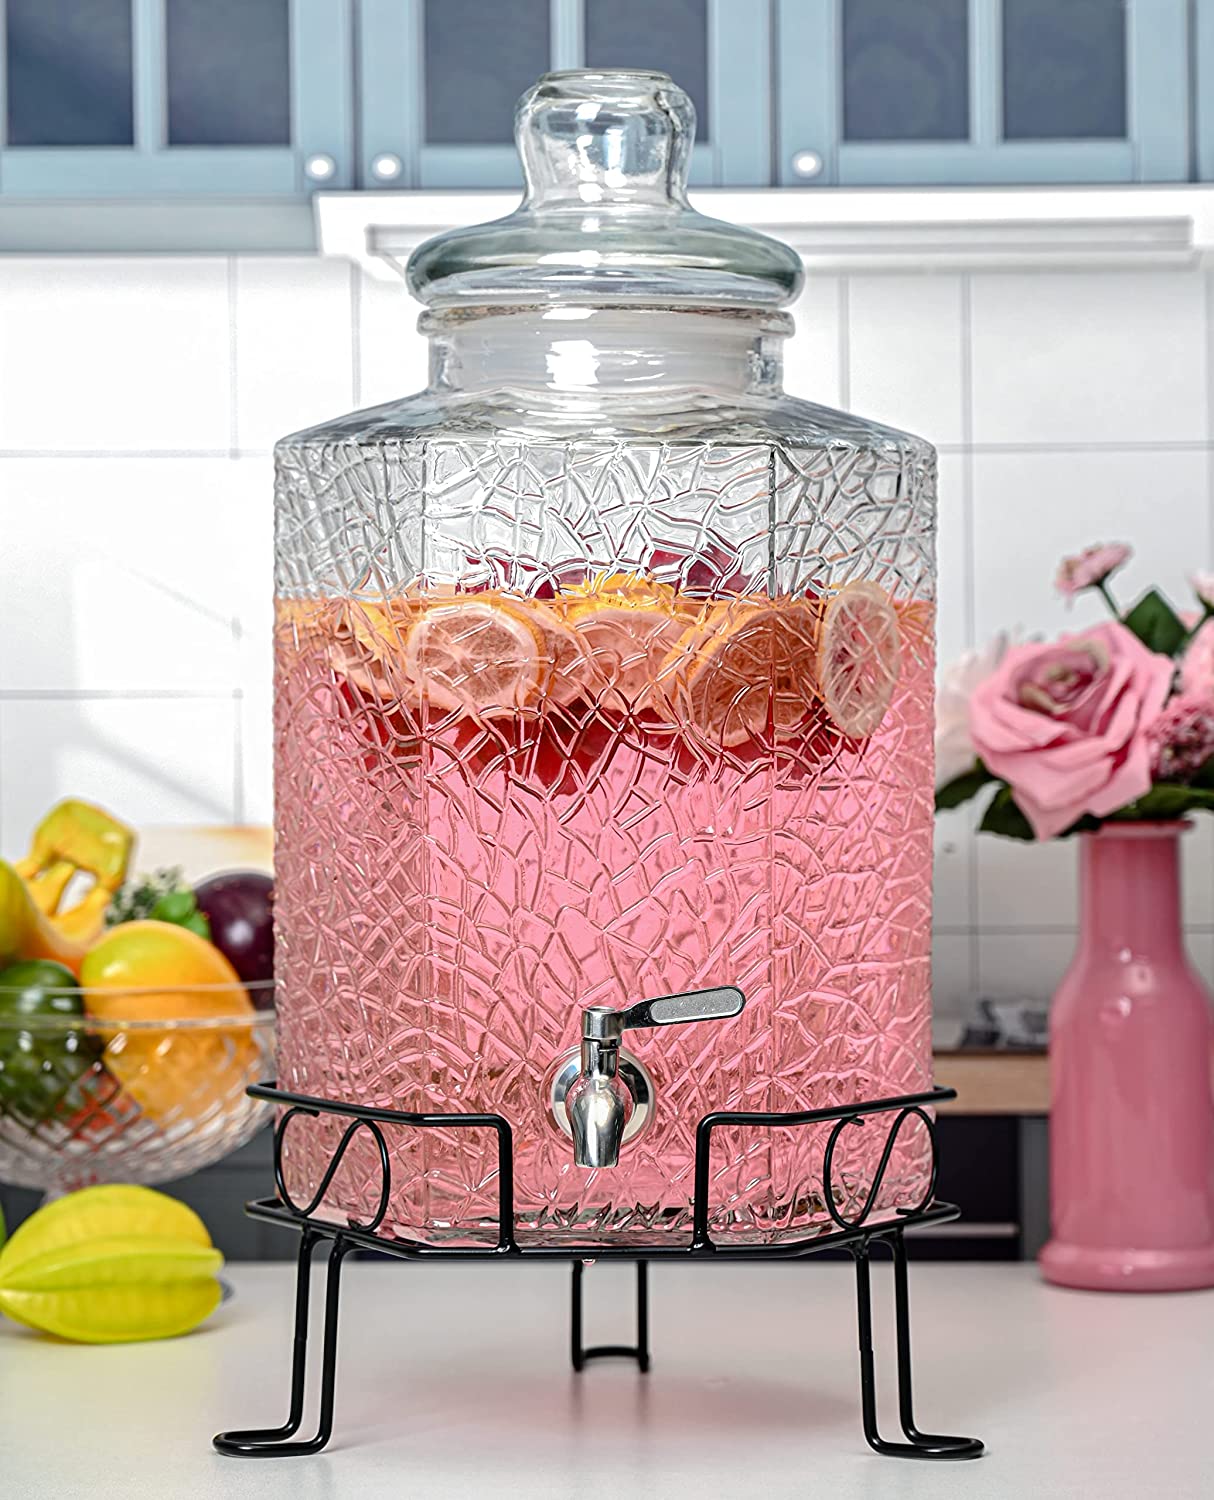 Redfern Party Glass Drink Dispenser & Stand, 2.5-Gallon